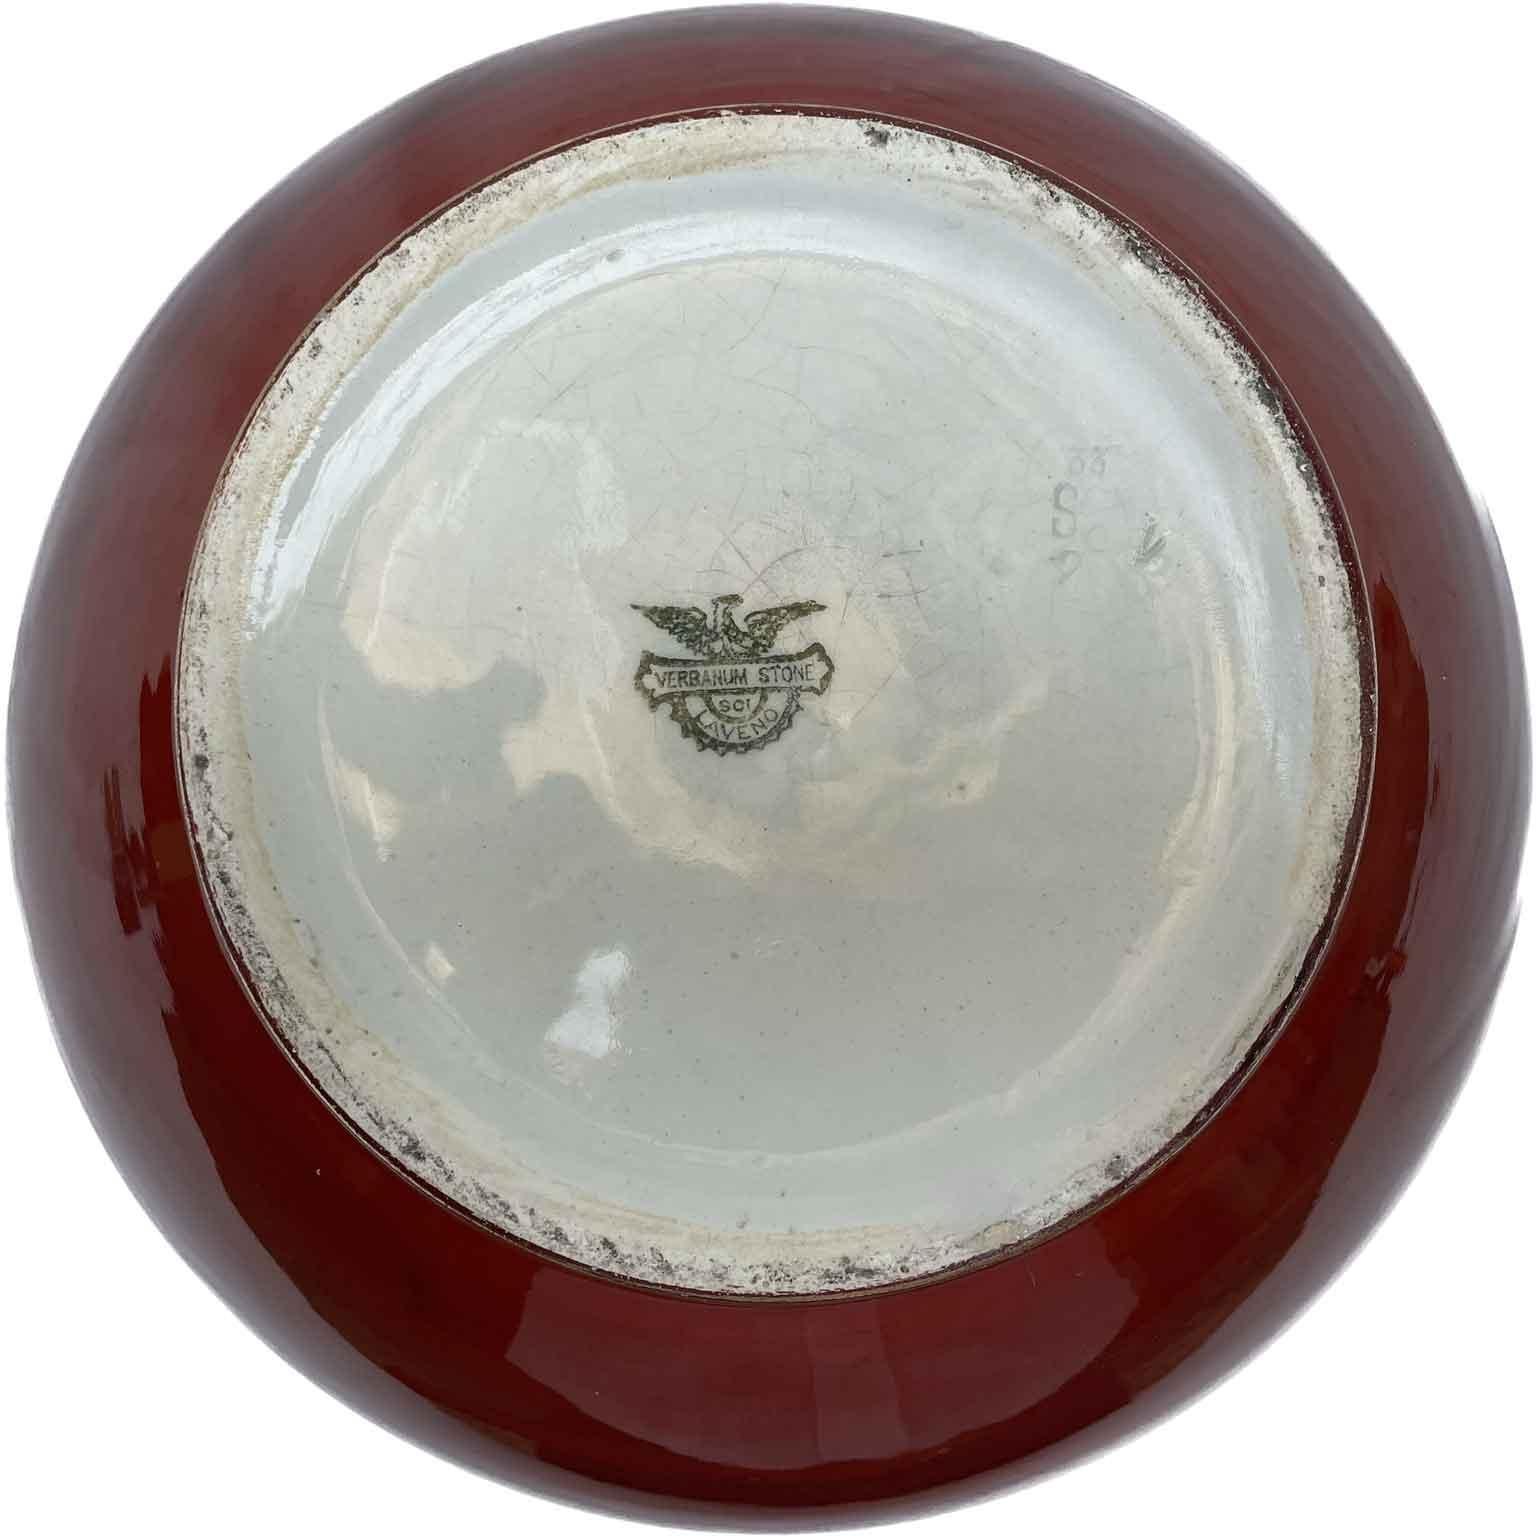 Guido Andlovitz Red and Gold Deco Vase 1930s Italian Ceramic Society Laveno For Sale 1